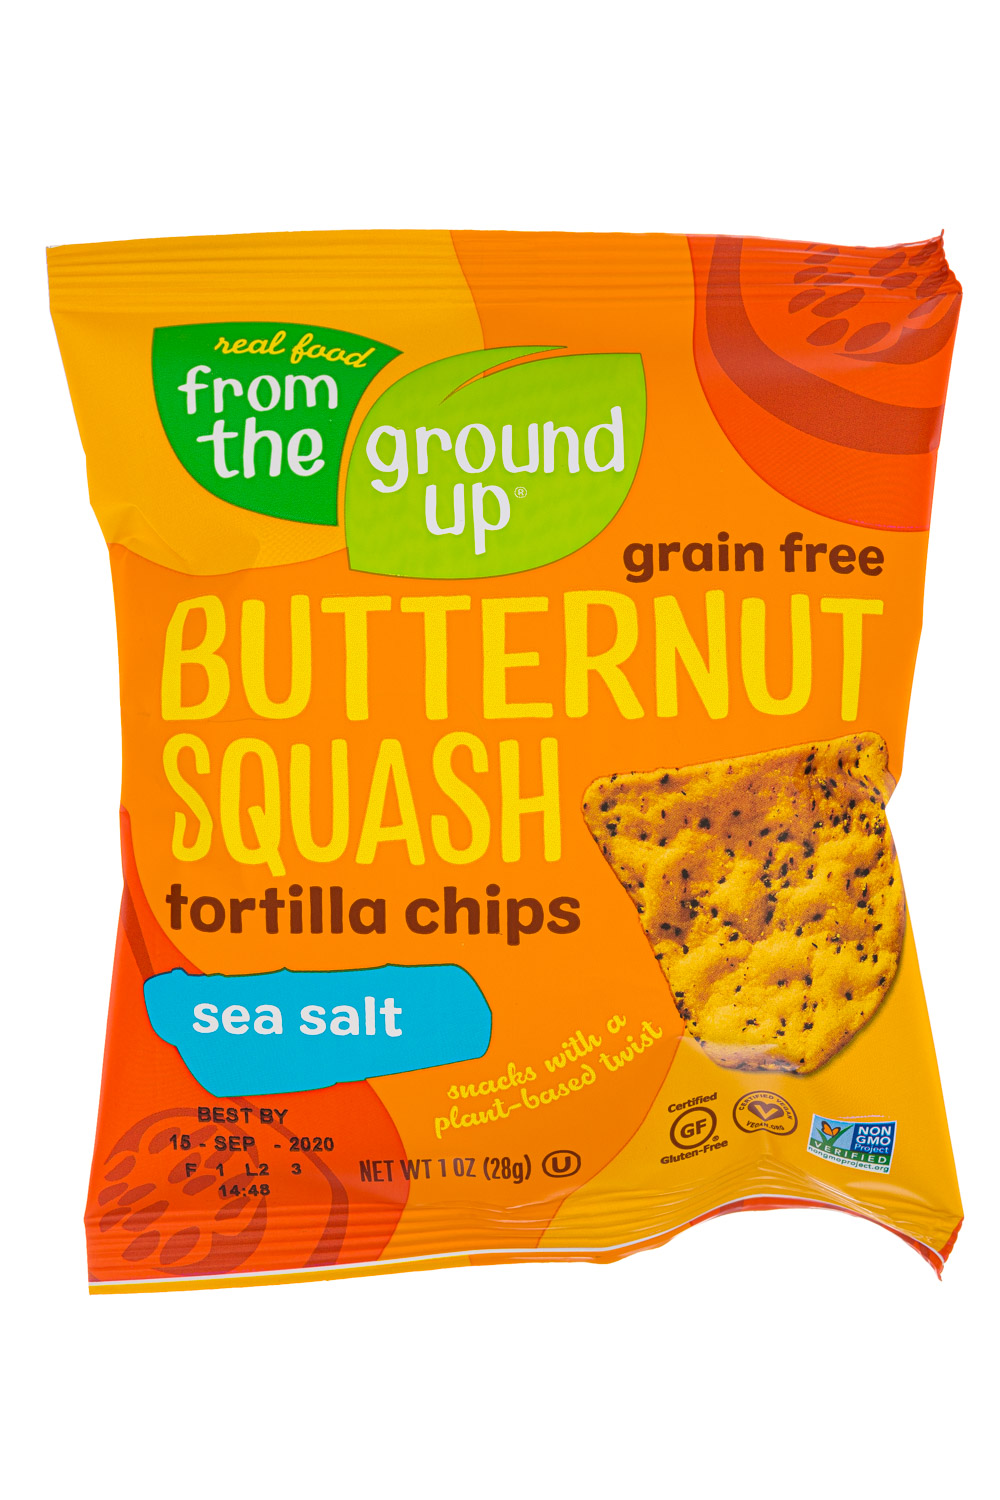 Butternut Squash - Sea Salt (1 oz) (2020)